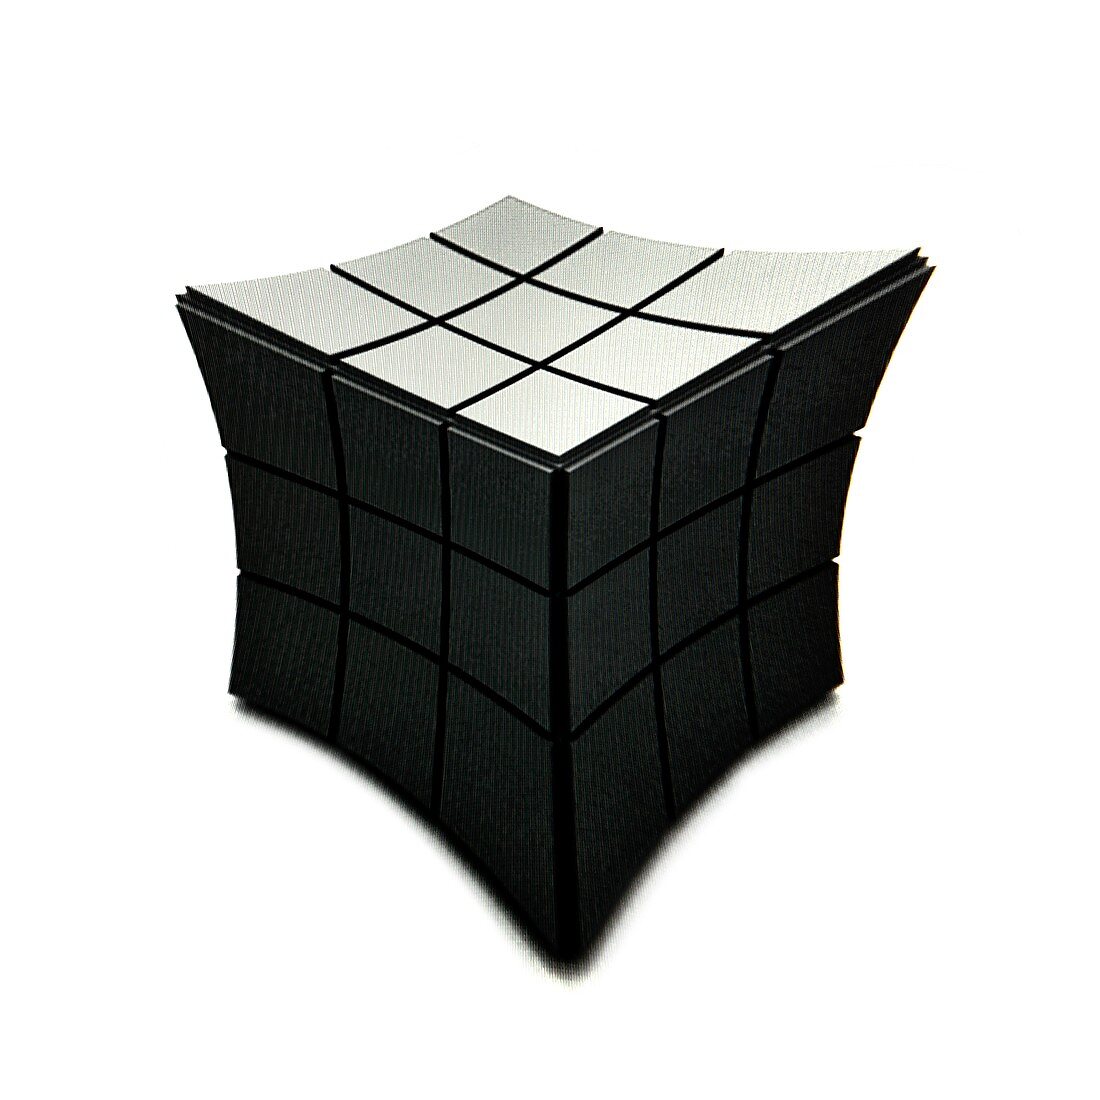 Distorted cube,artwork